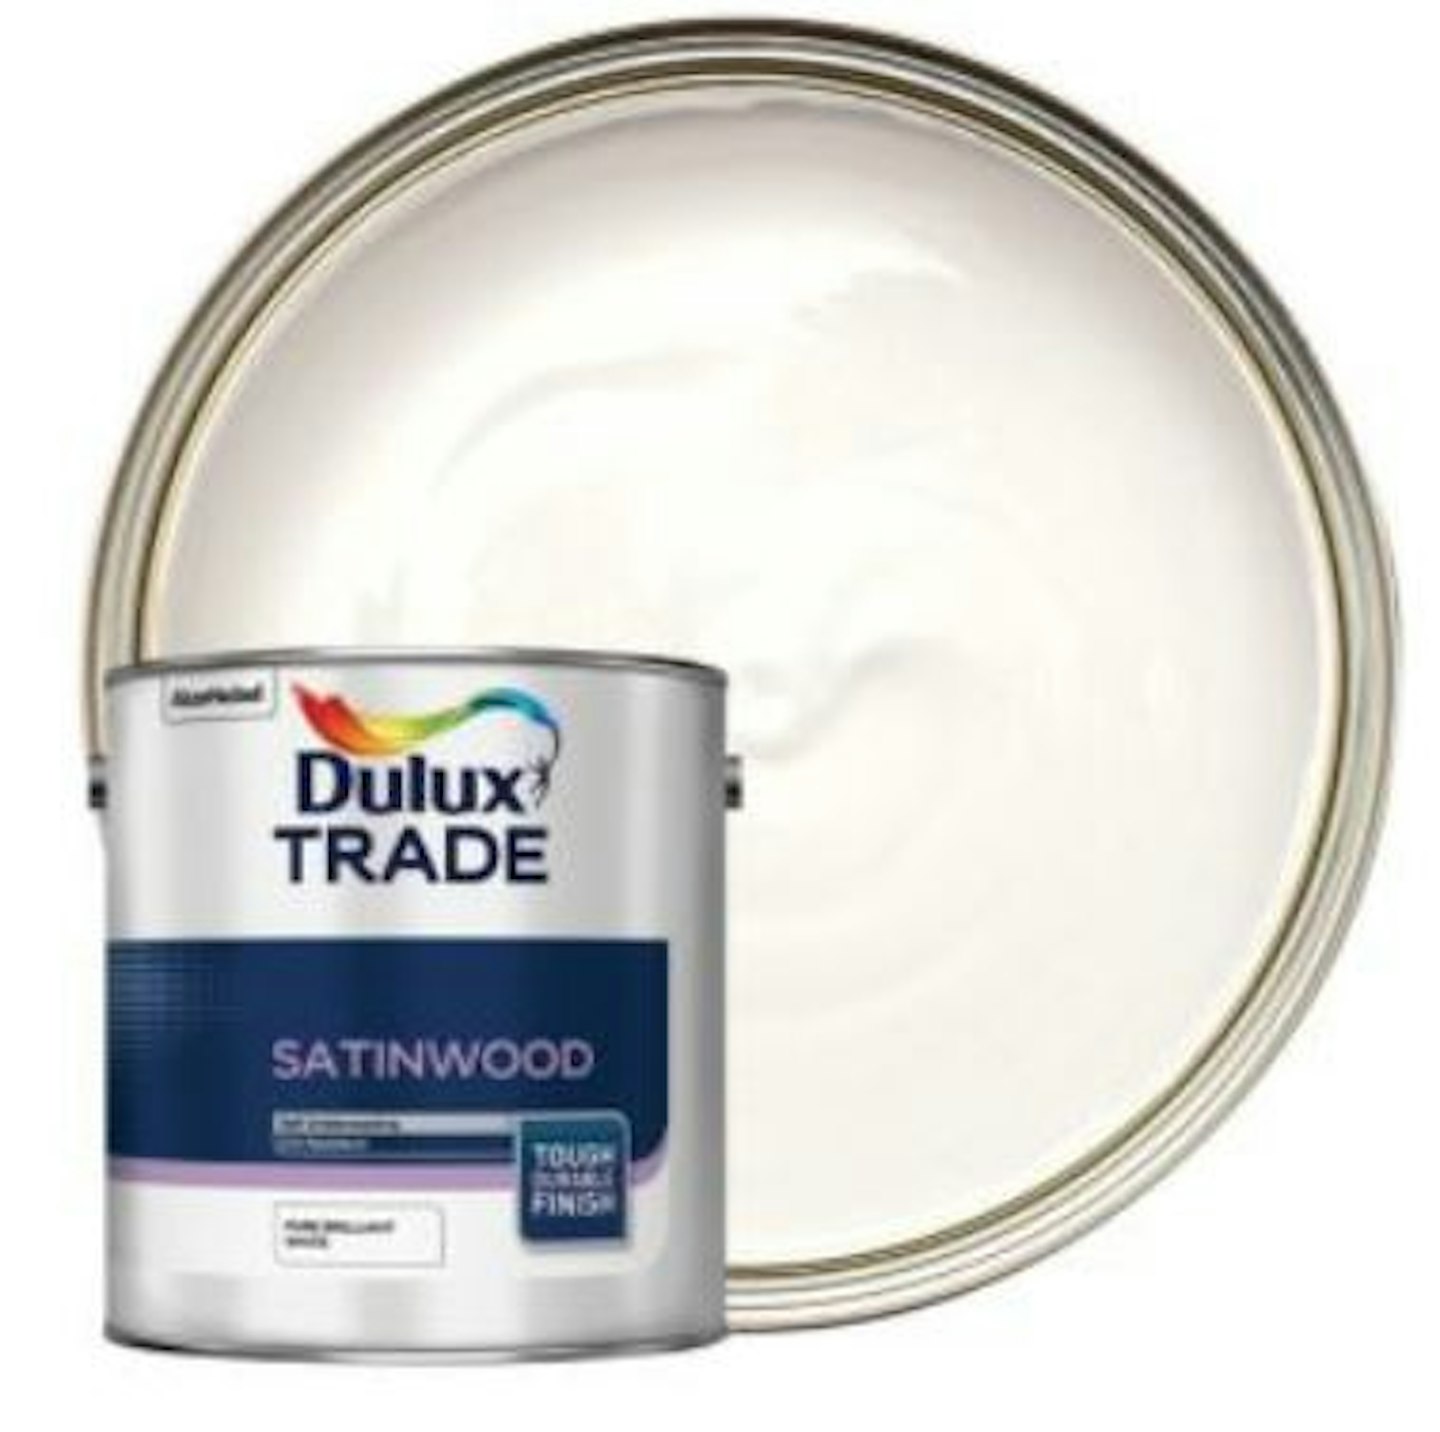 Dulux Trade Satinwood Paint